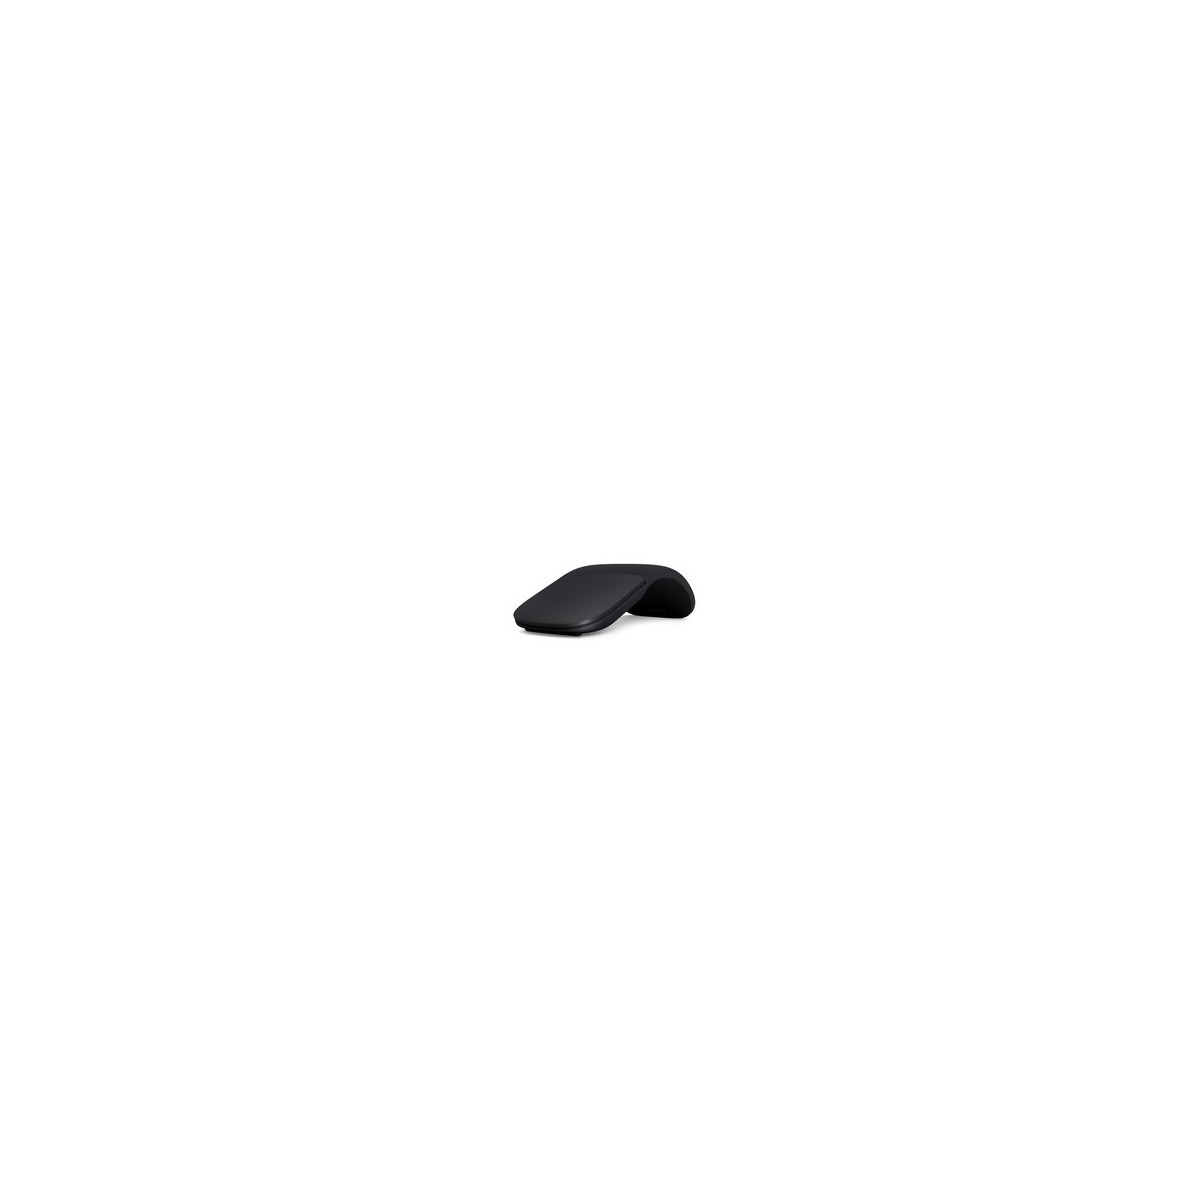 Microsoft Surface Arc Mouse - Mouse - 1,000 dpi Optical - 2 keys - Black